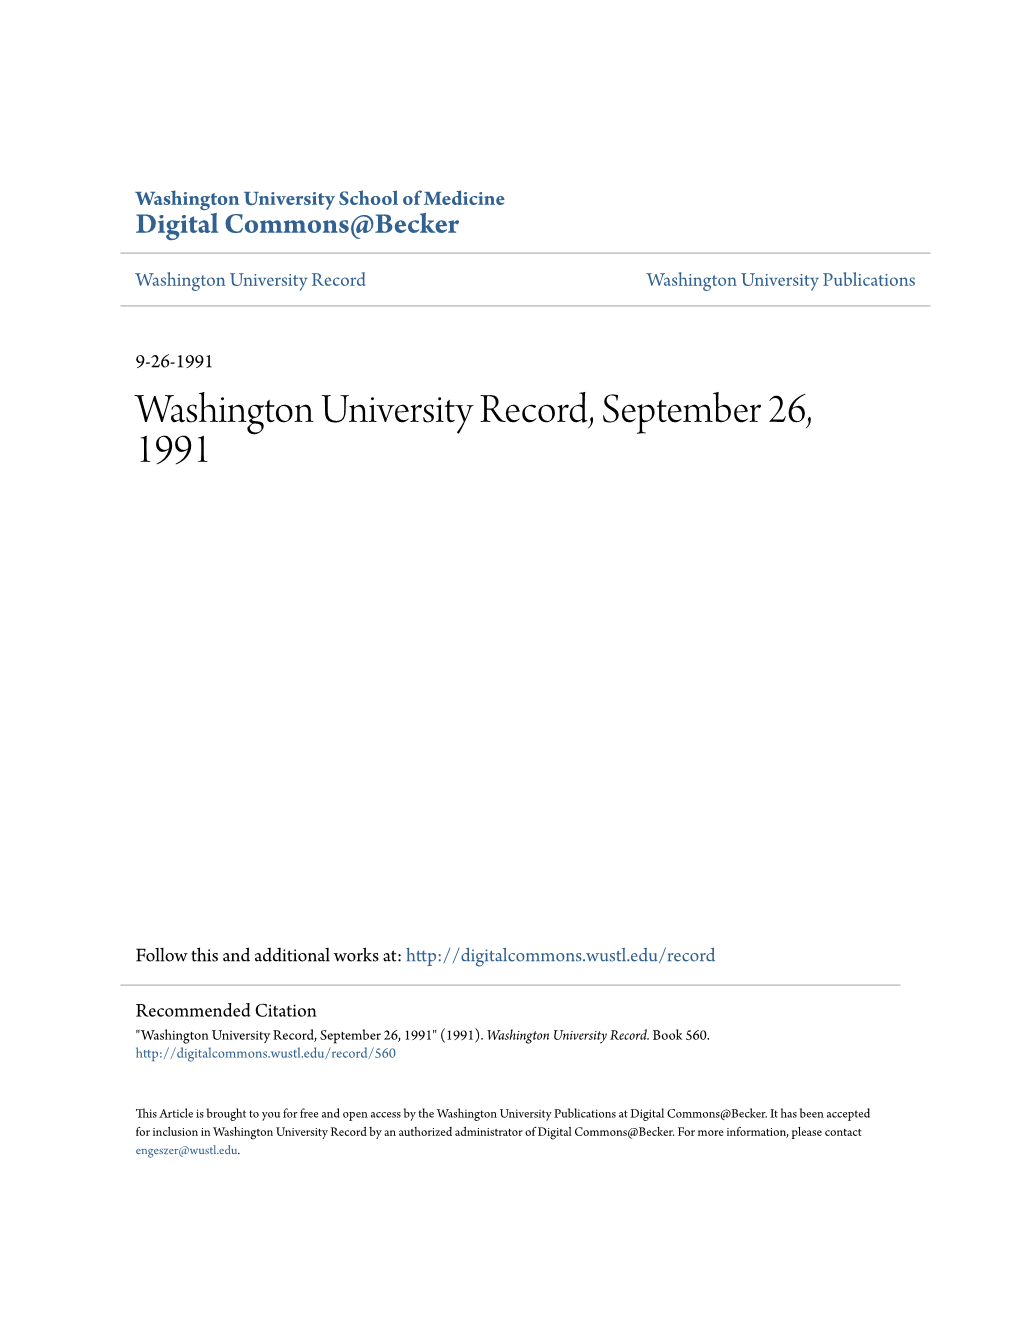 Washington University Record, September 26, 1991